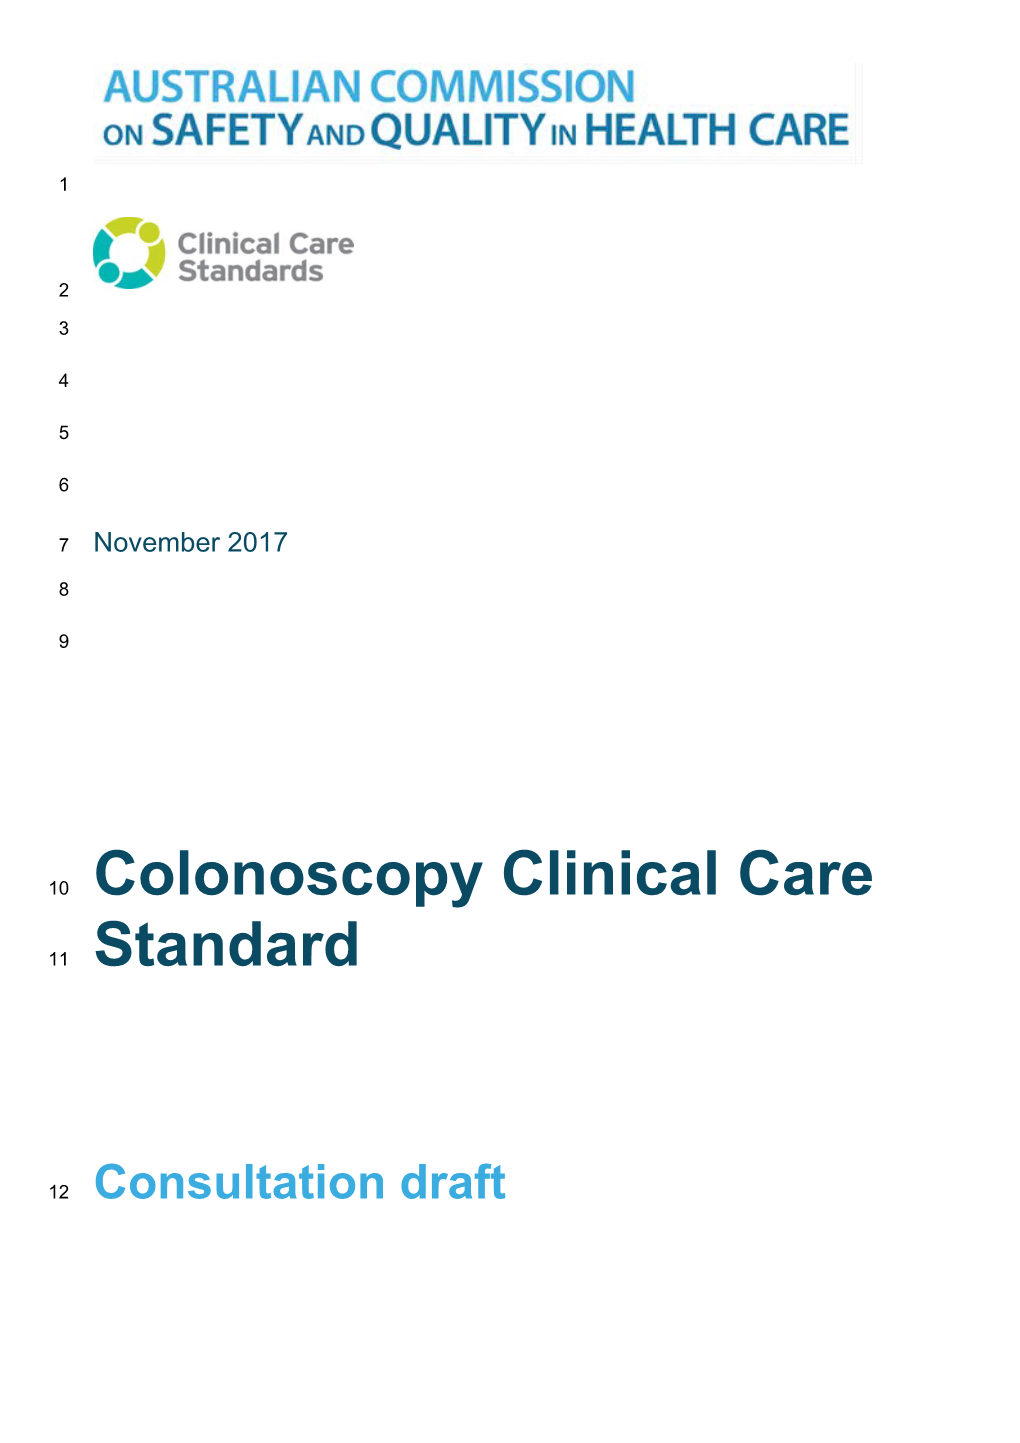 Colonoscopy Clinical Care Standard